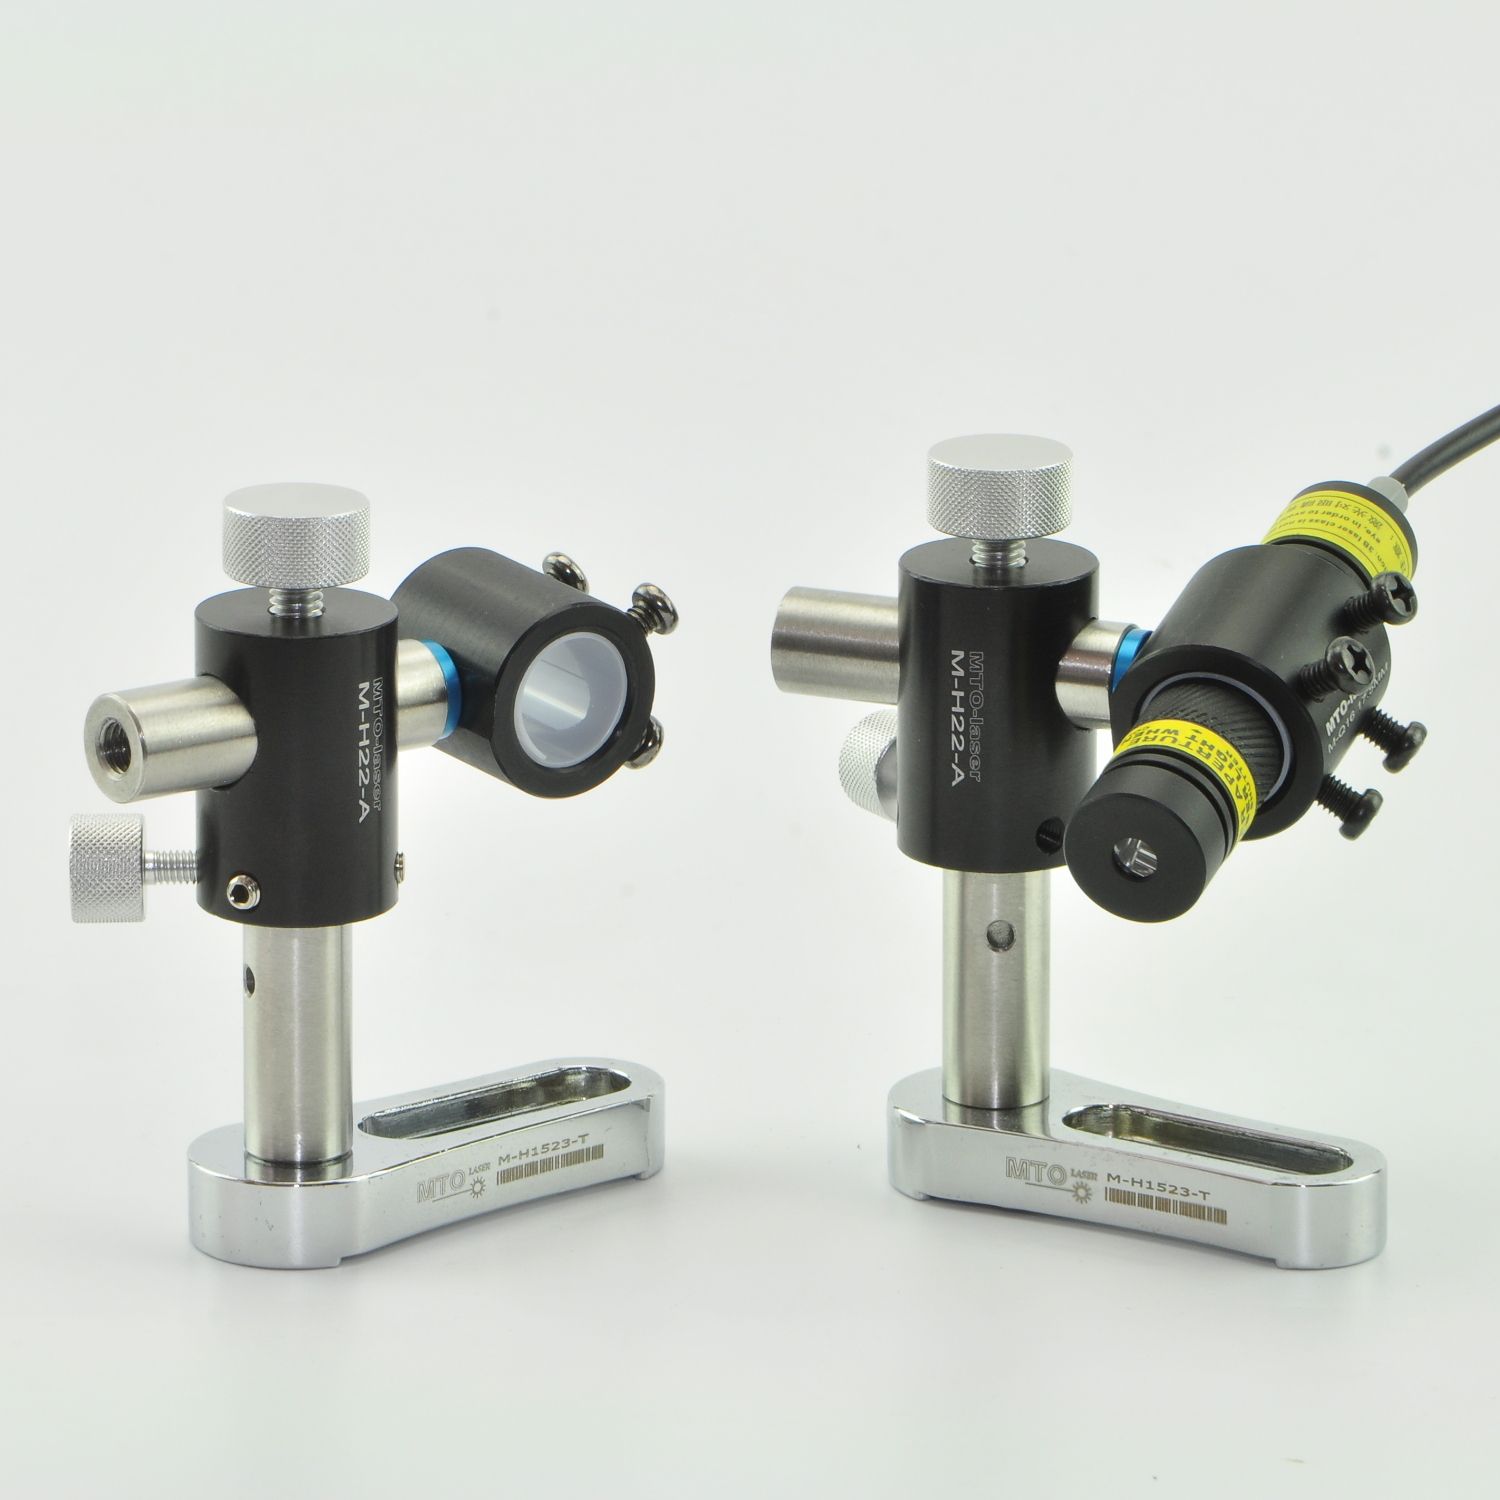 MTO-HT2-Two-Laser-Axis-360deg-Positioning-Shockproof-Bracket-Holder-for-135mm-215mm-Laser-Module-1292427